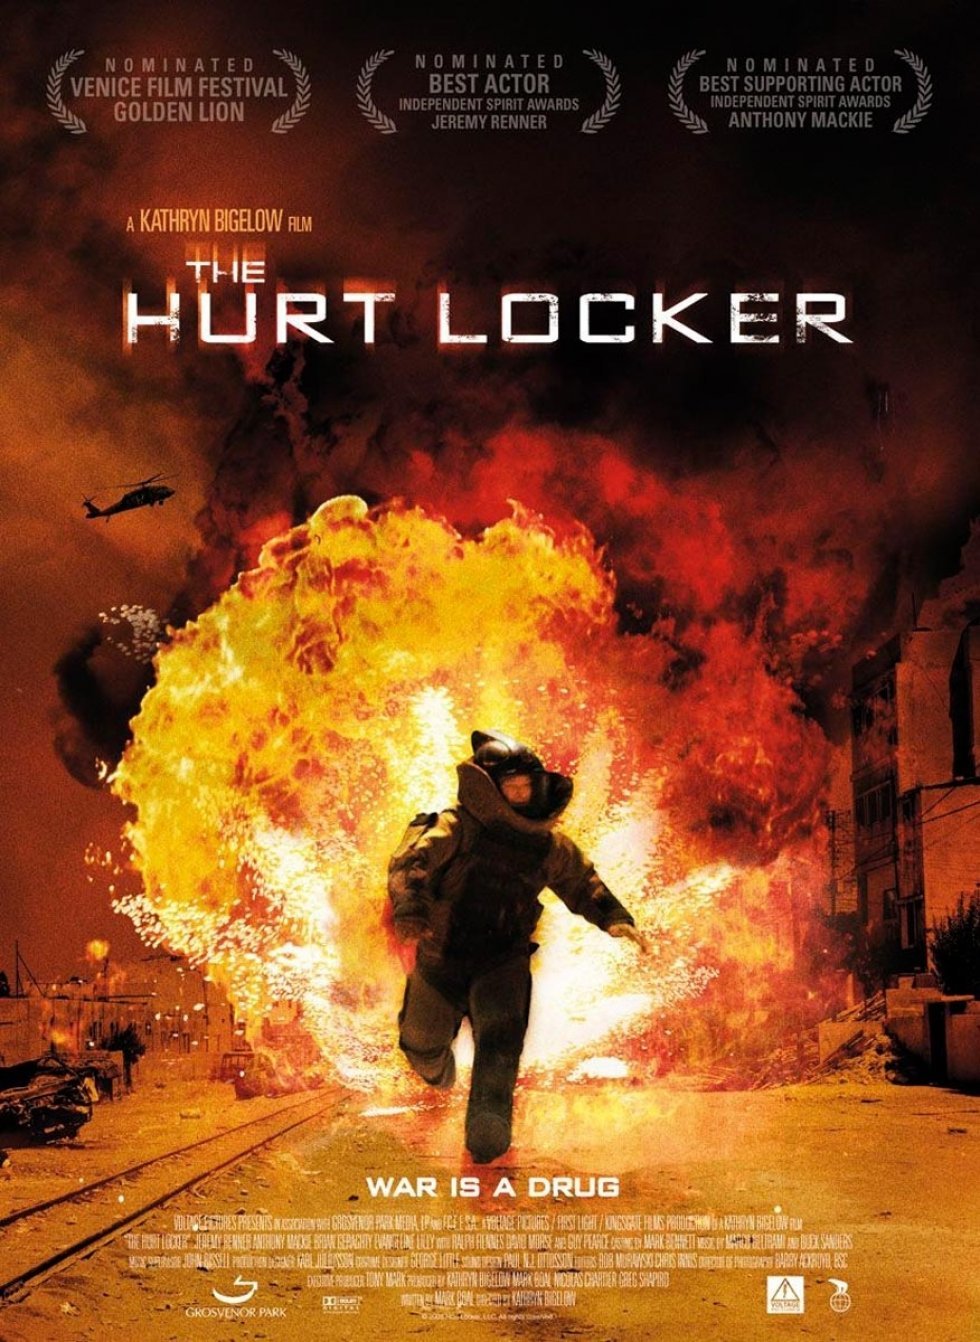 The Hurt Locker - Ude på dvd og Blu-ray